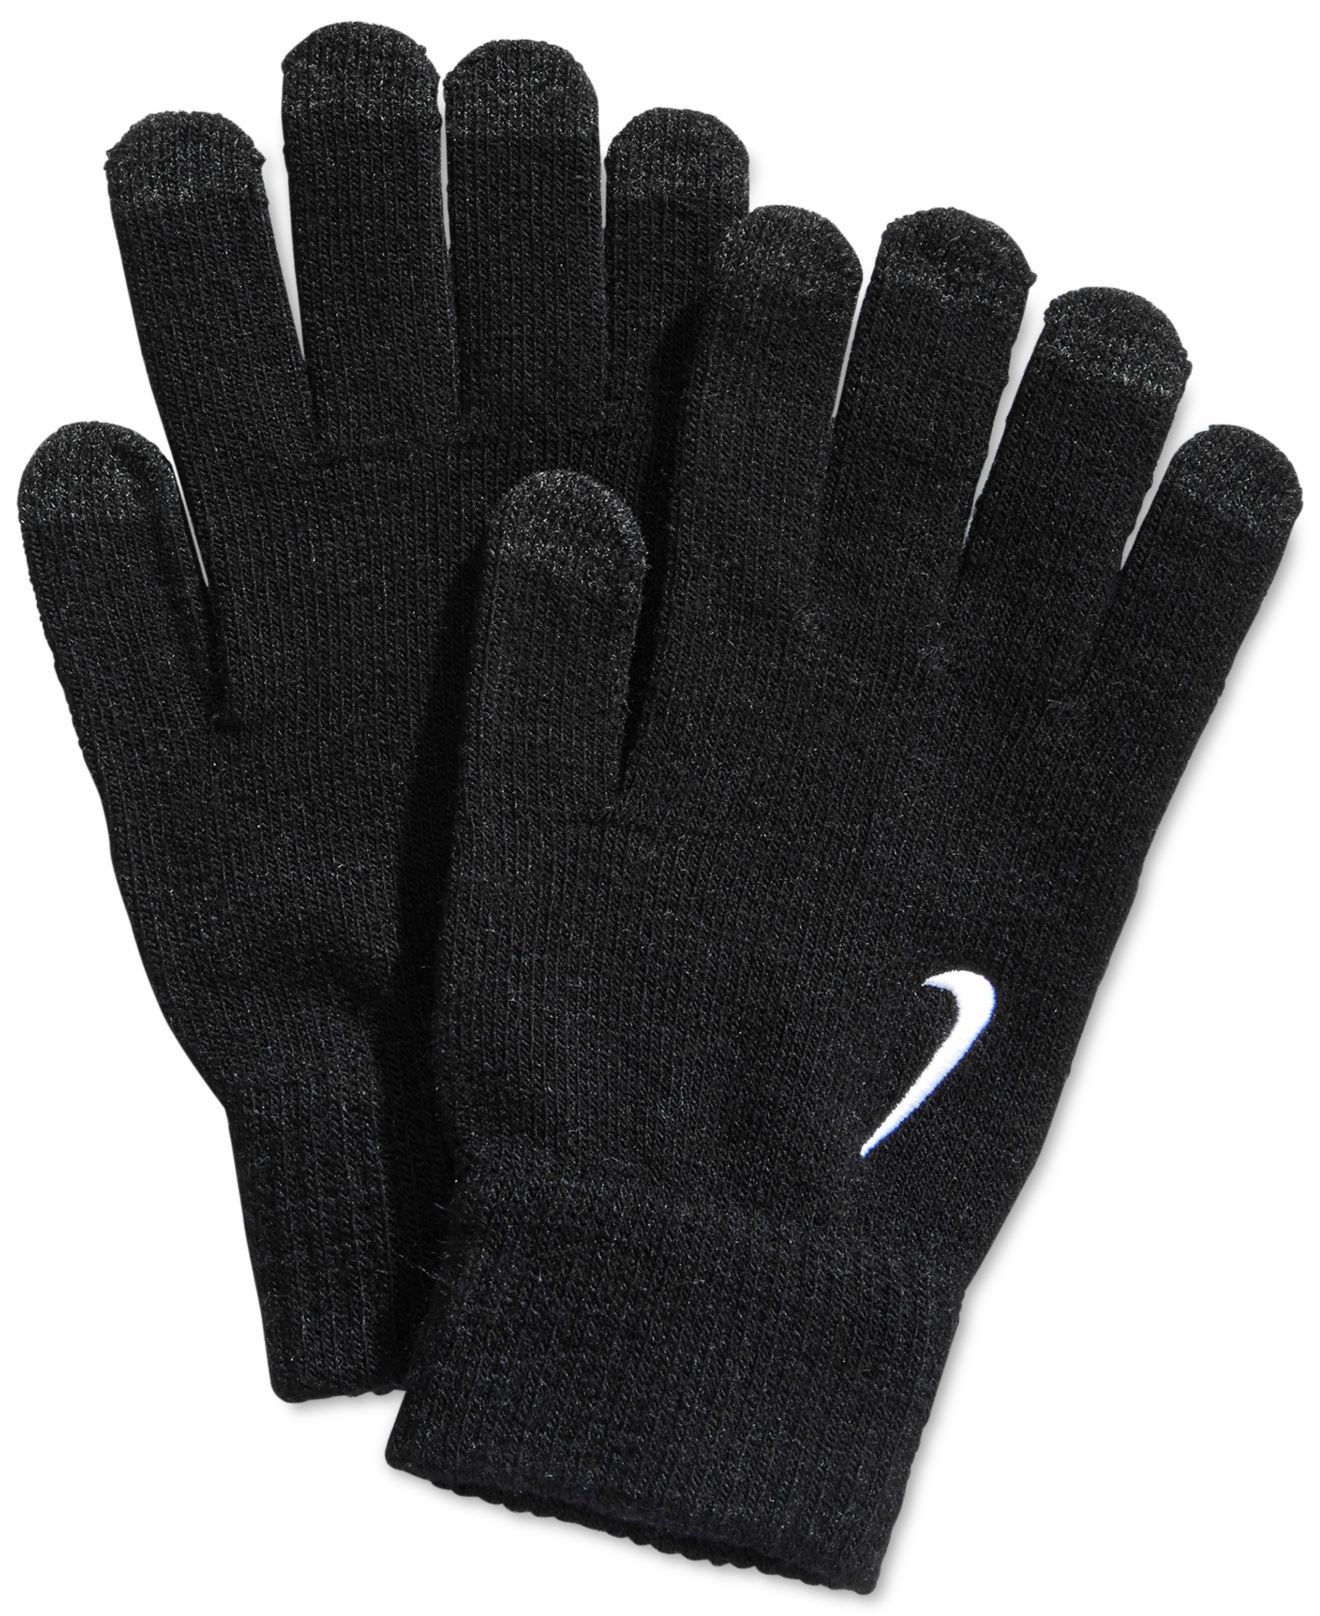 Nike Knit Tech Gloves in Black/White 